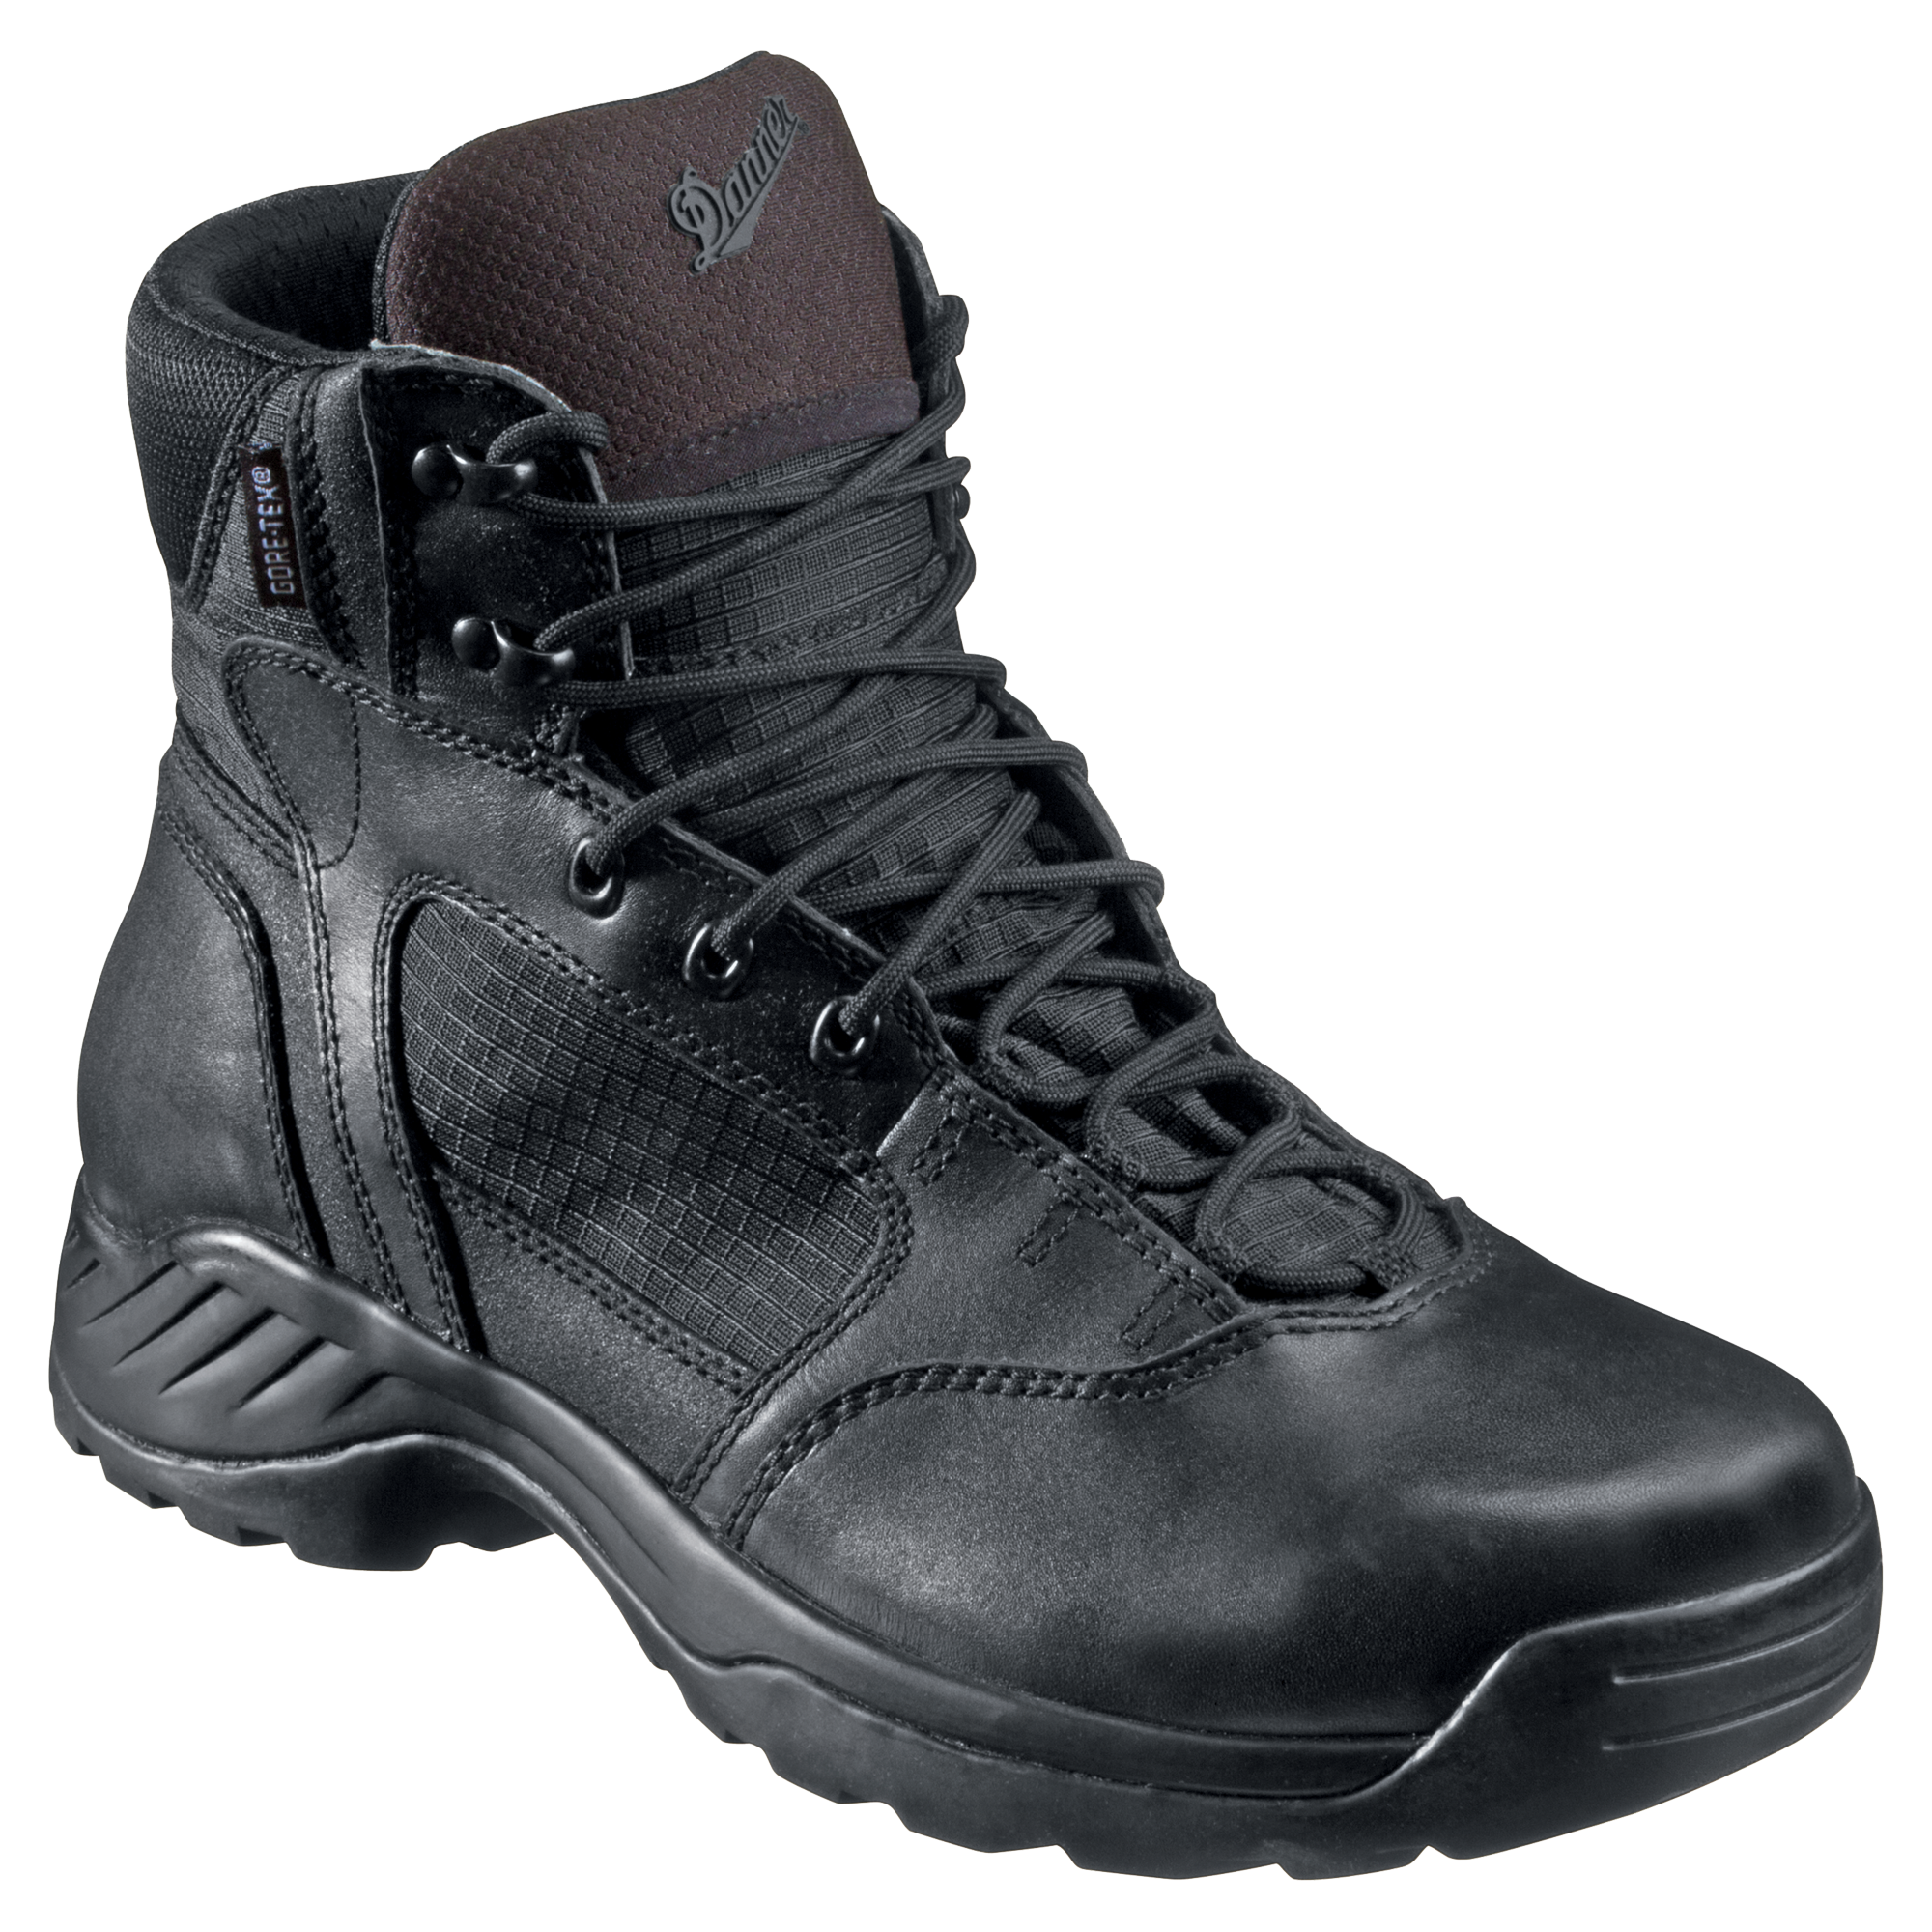 Danner Kinetic Side-Zip GORE-TEX Work Boots for Men - Black - 7W